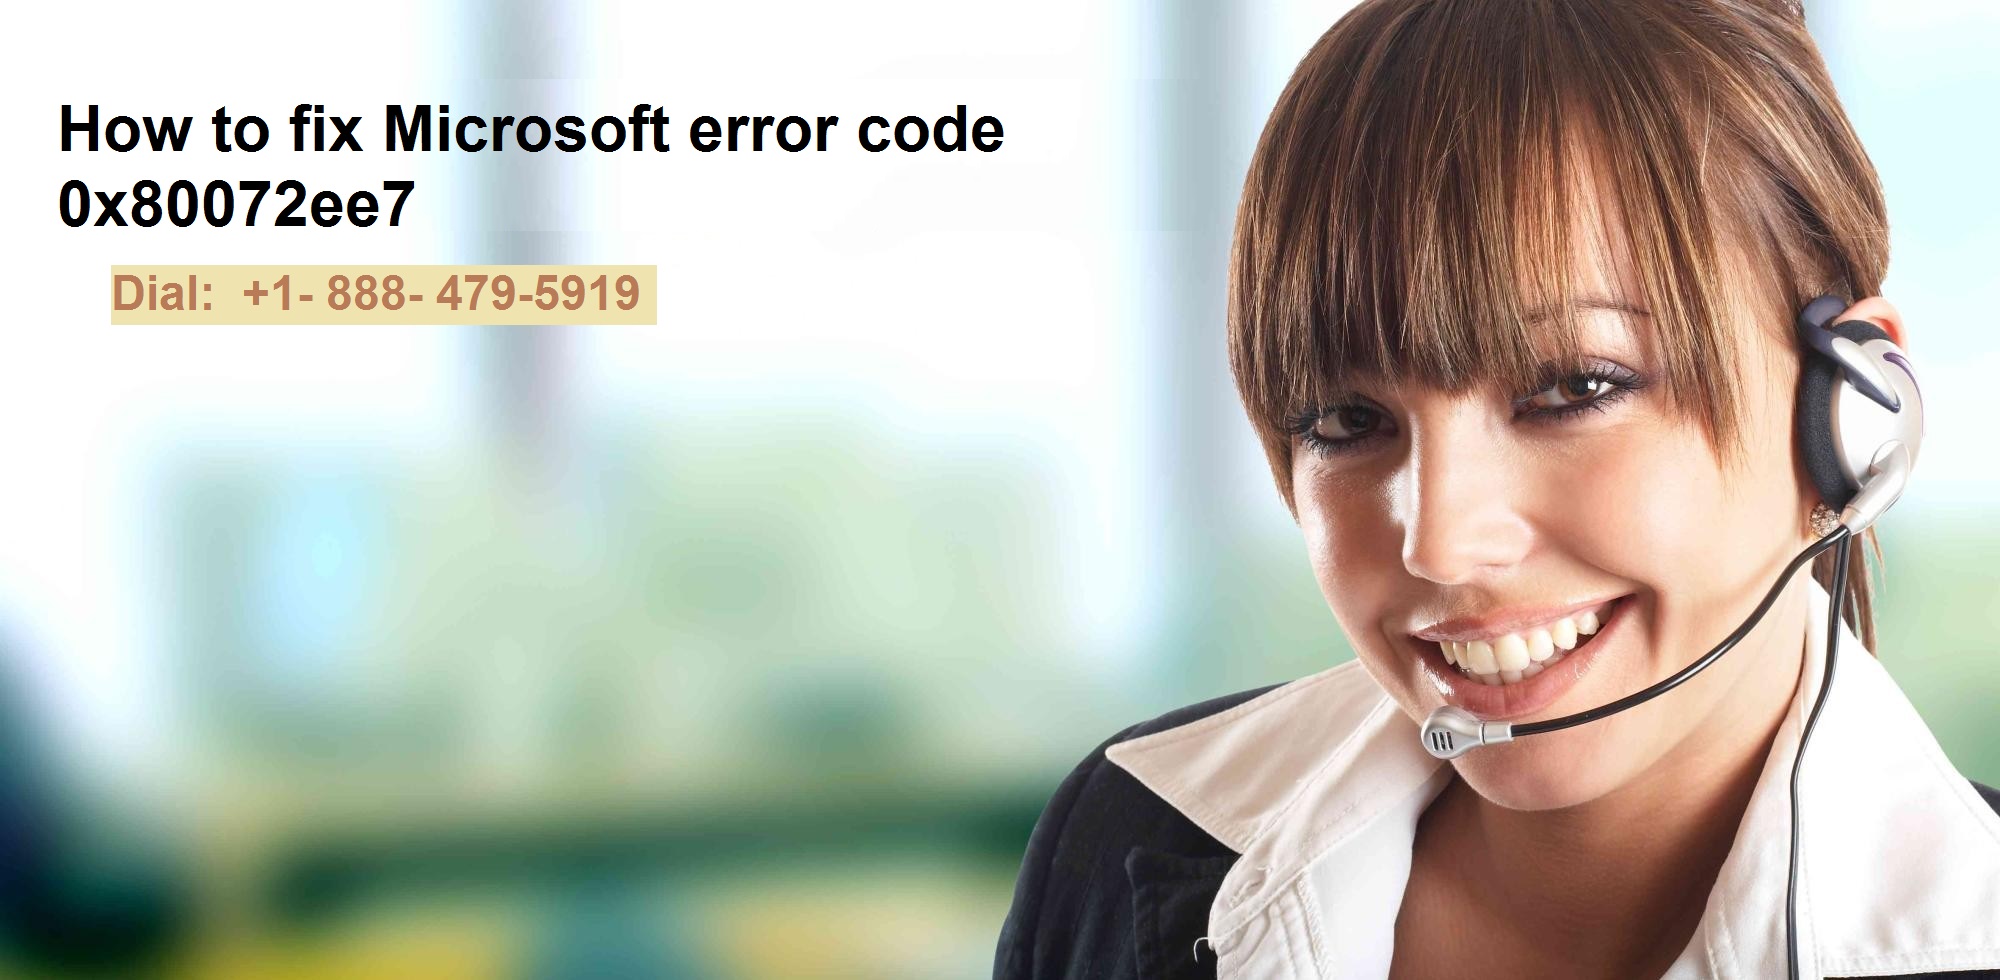  Microsoft error code 0x80072ee7